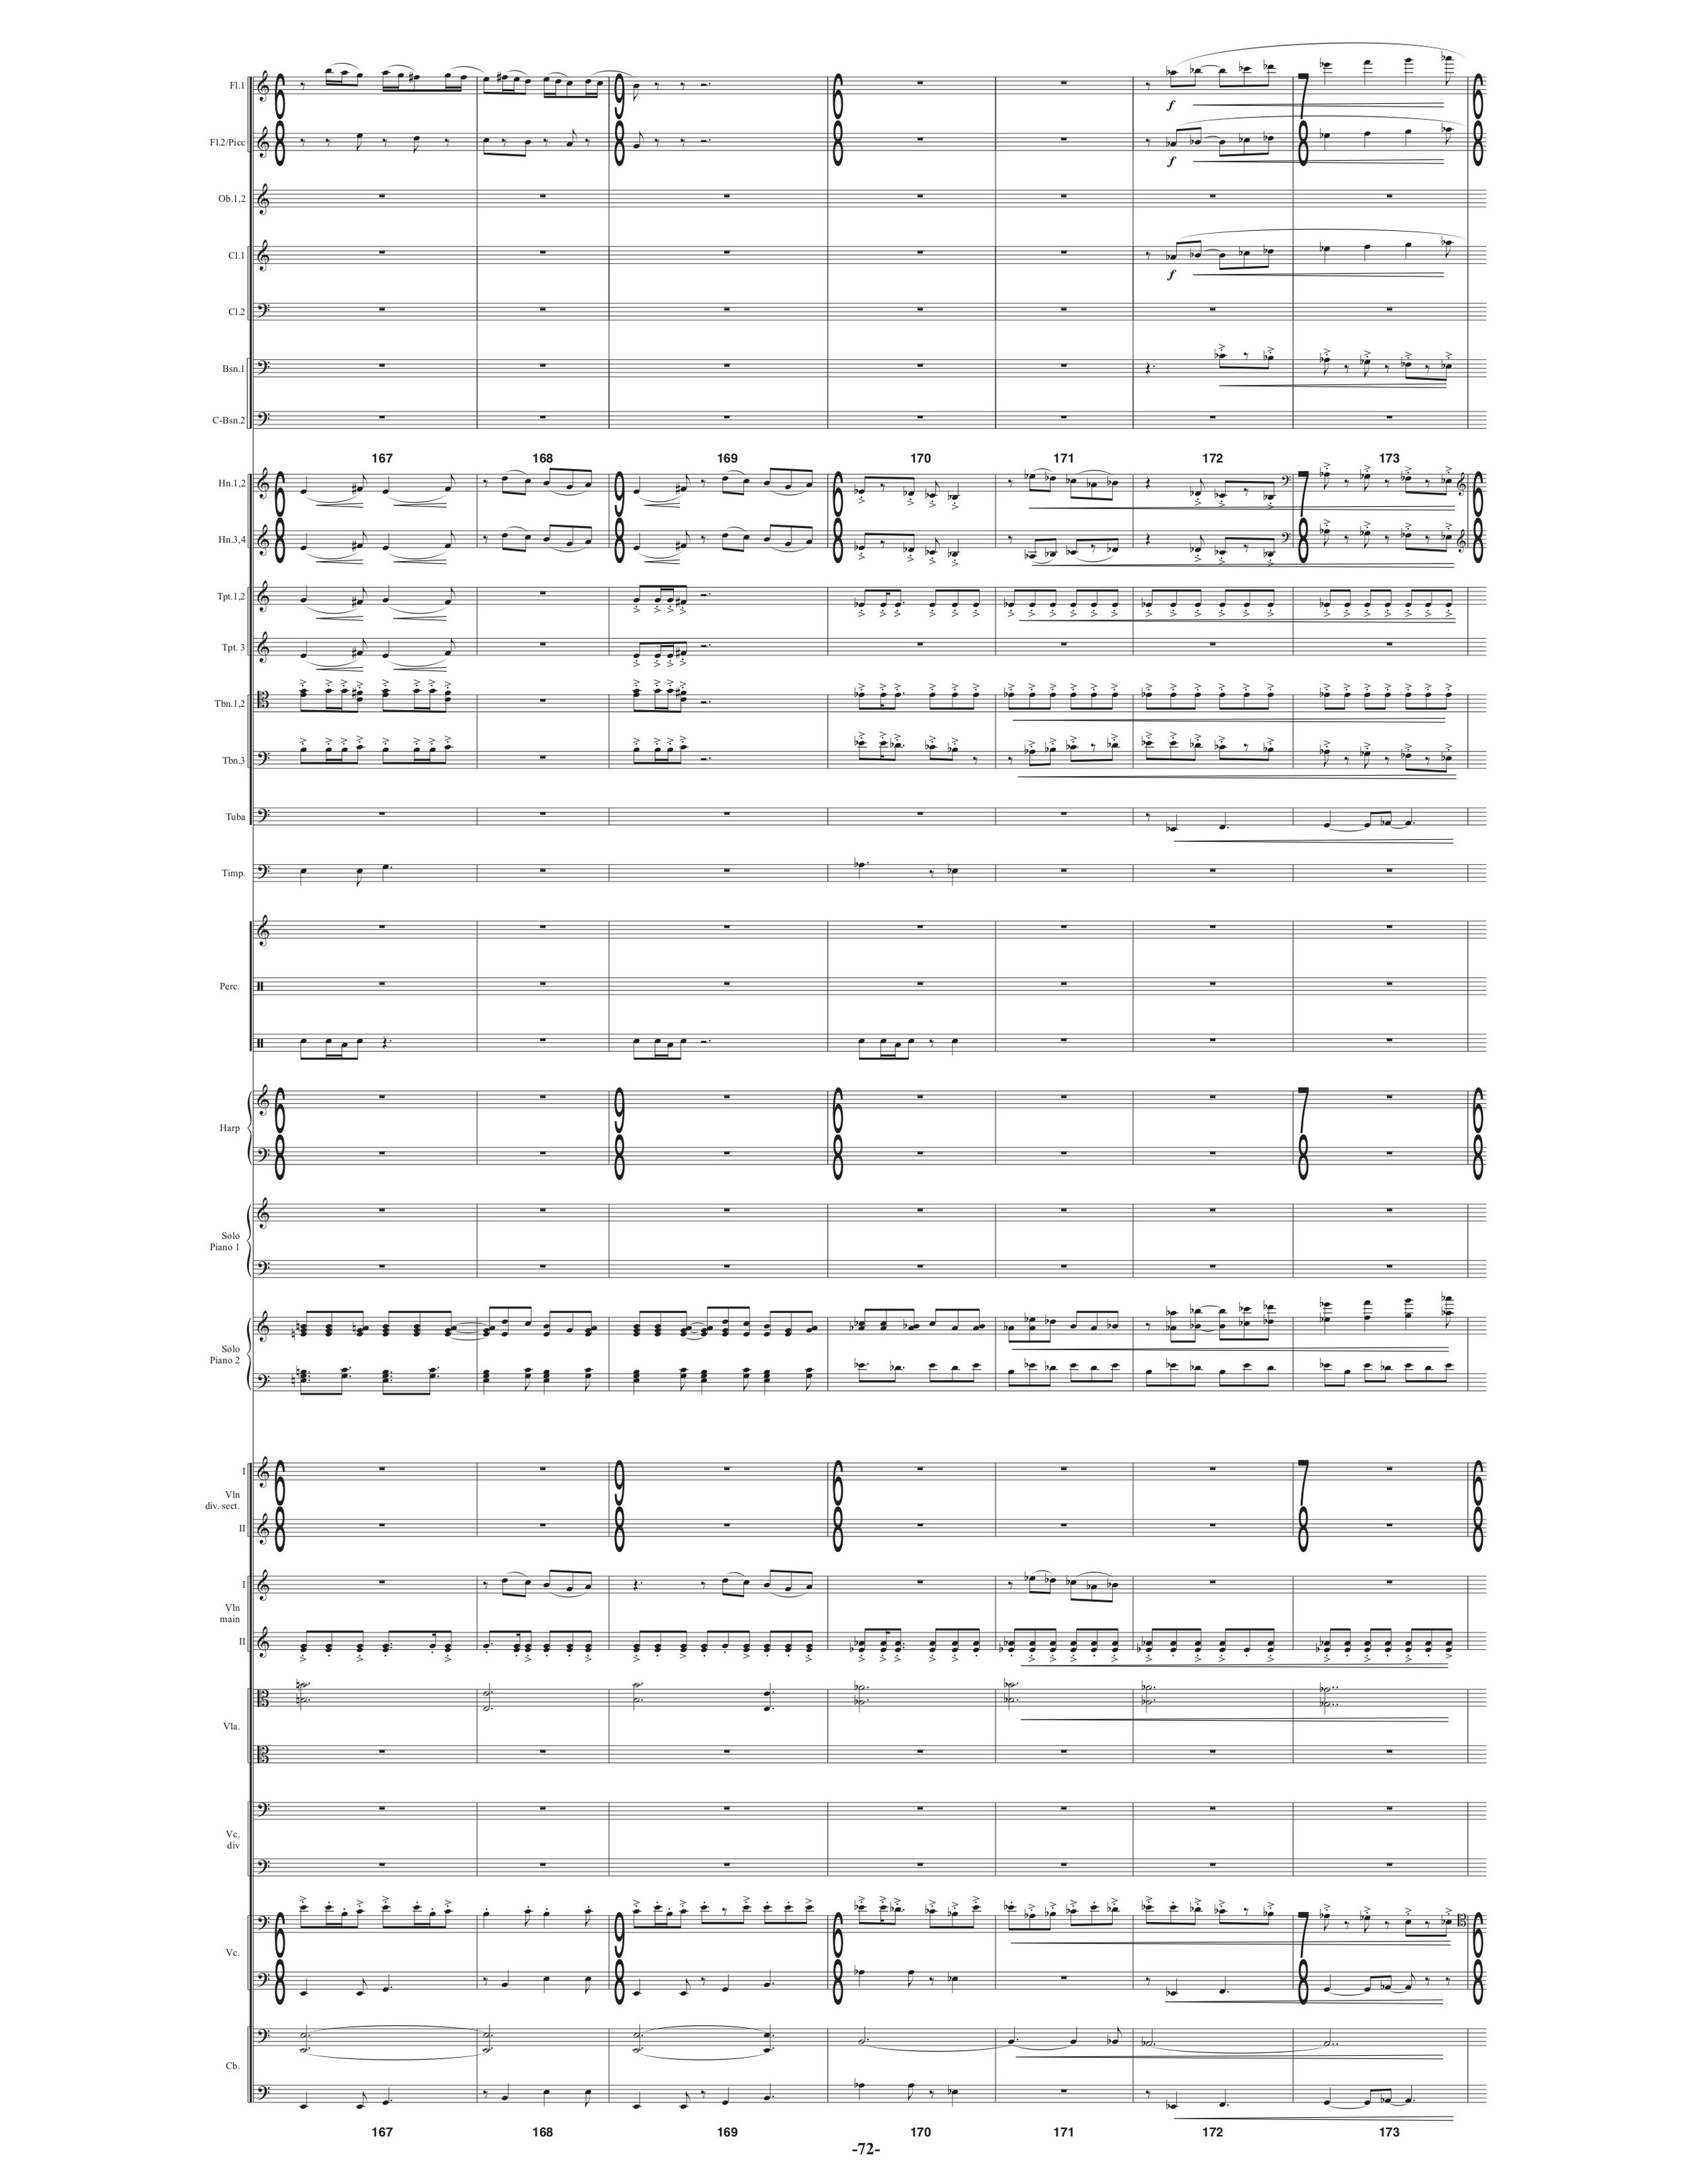 Symphony_Orch & 2 Pianos p77.jpg